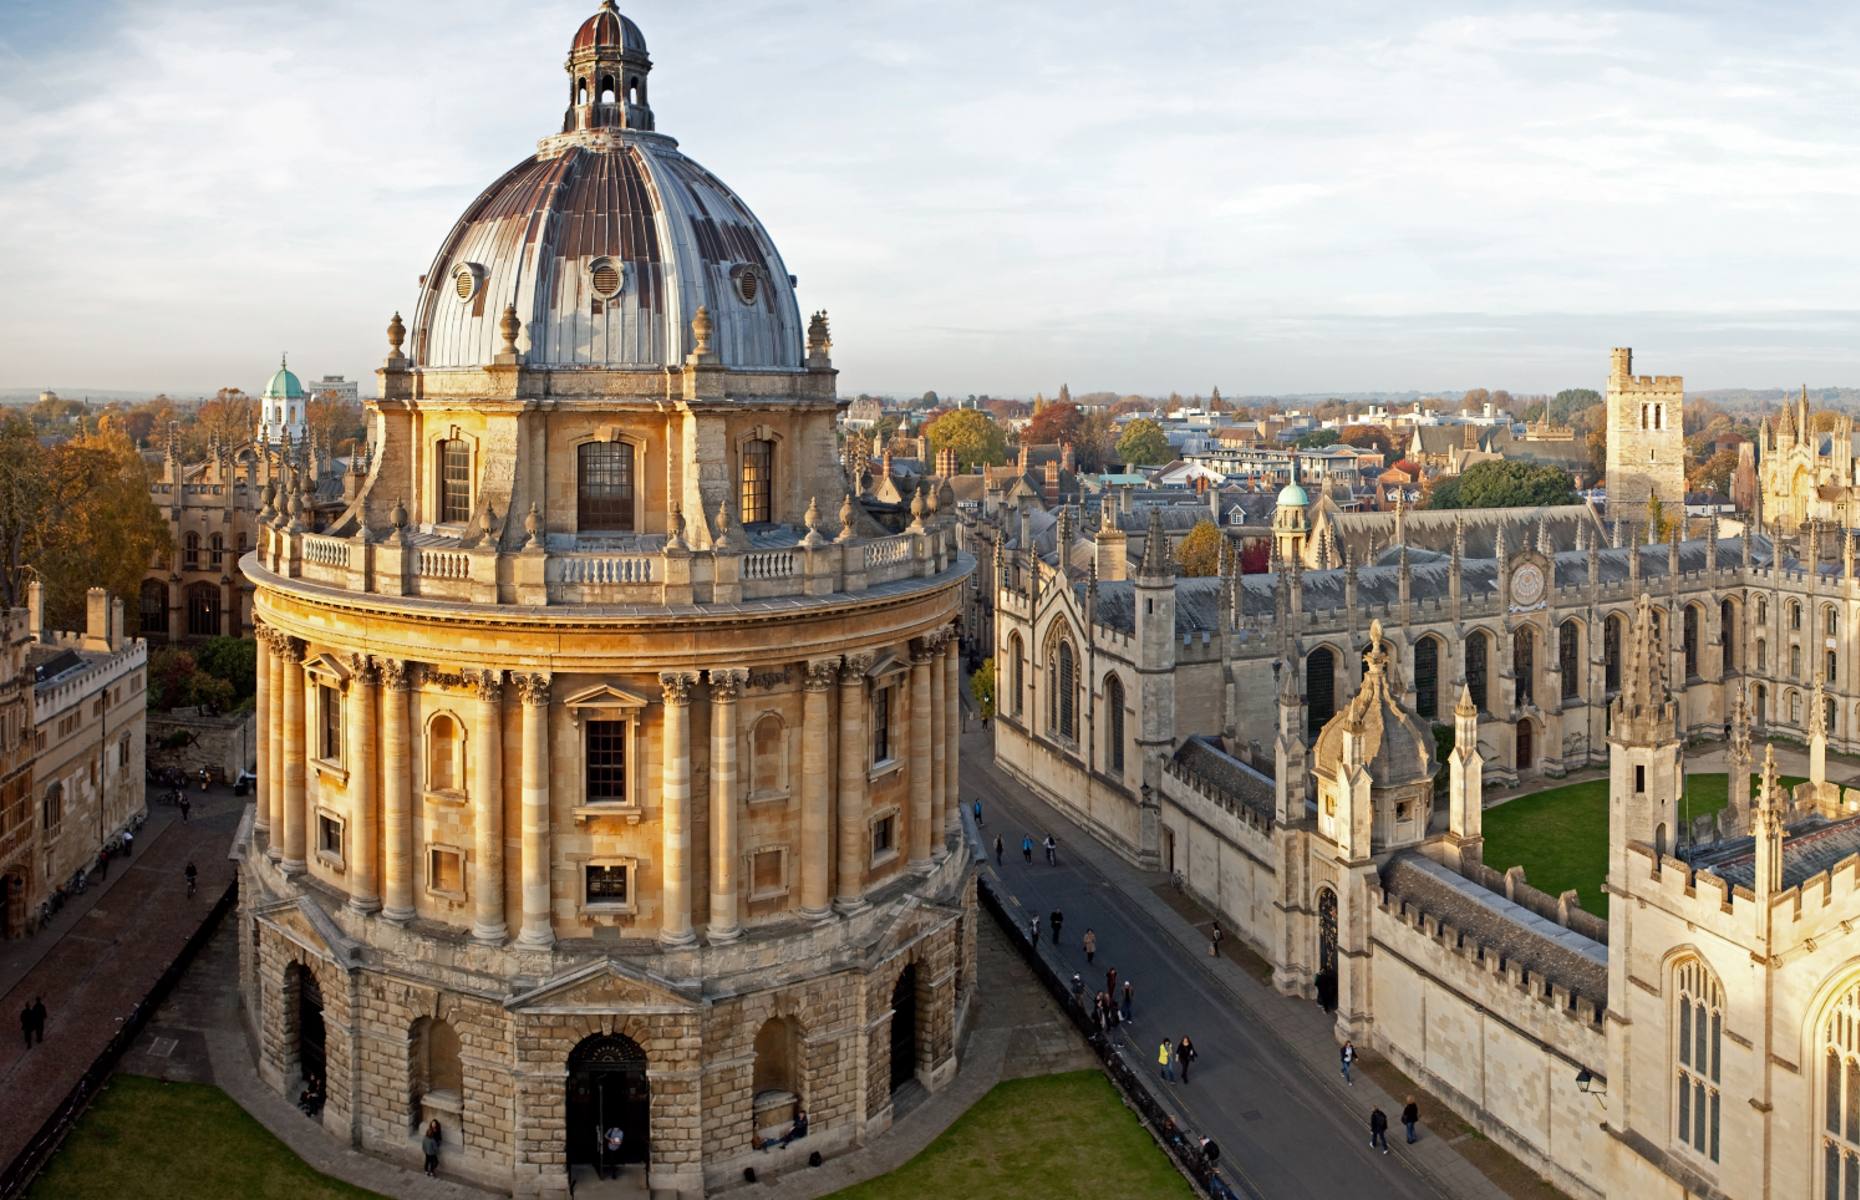 Oxford (Image: Skowronek/Shutterstock)